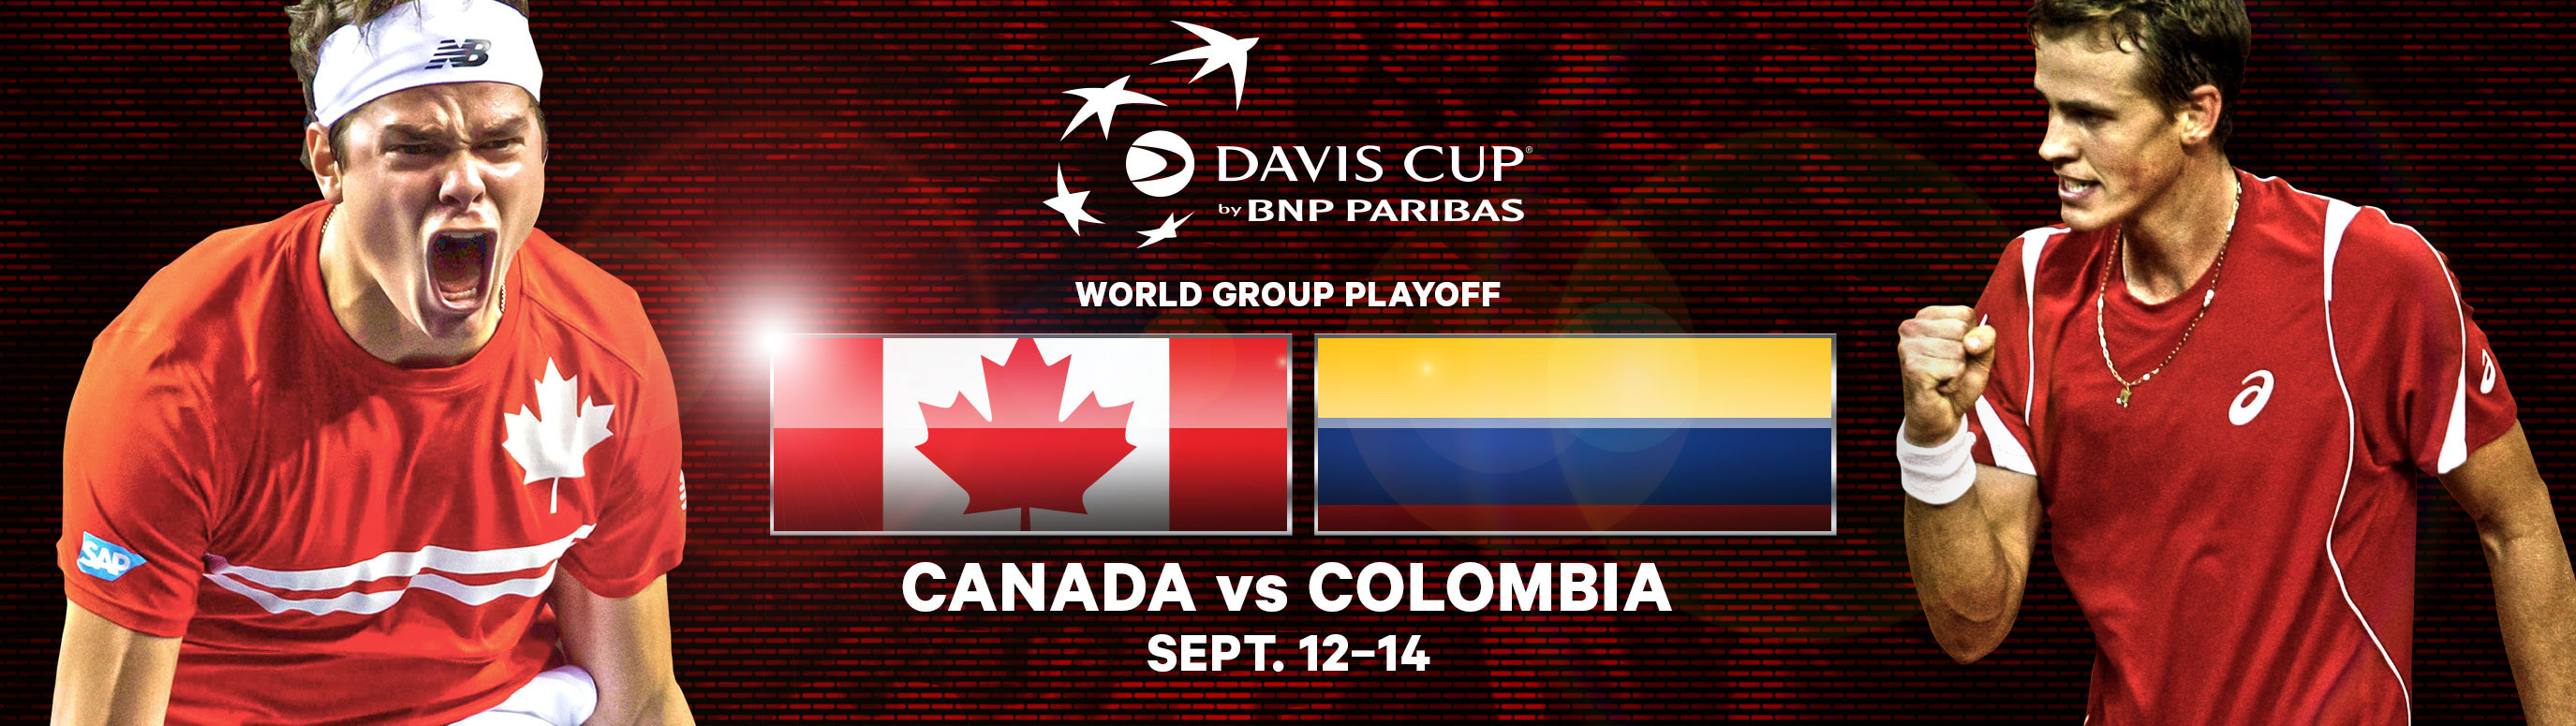 Davis Cup LIVE Canada vs Colombia in Halifax